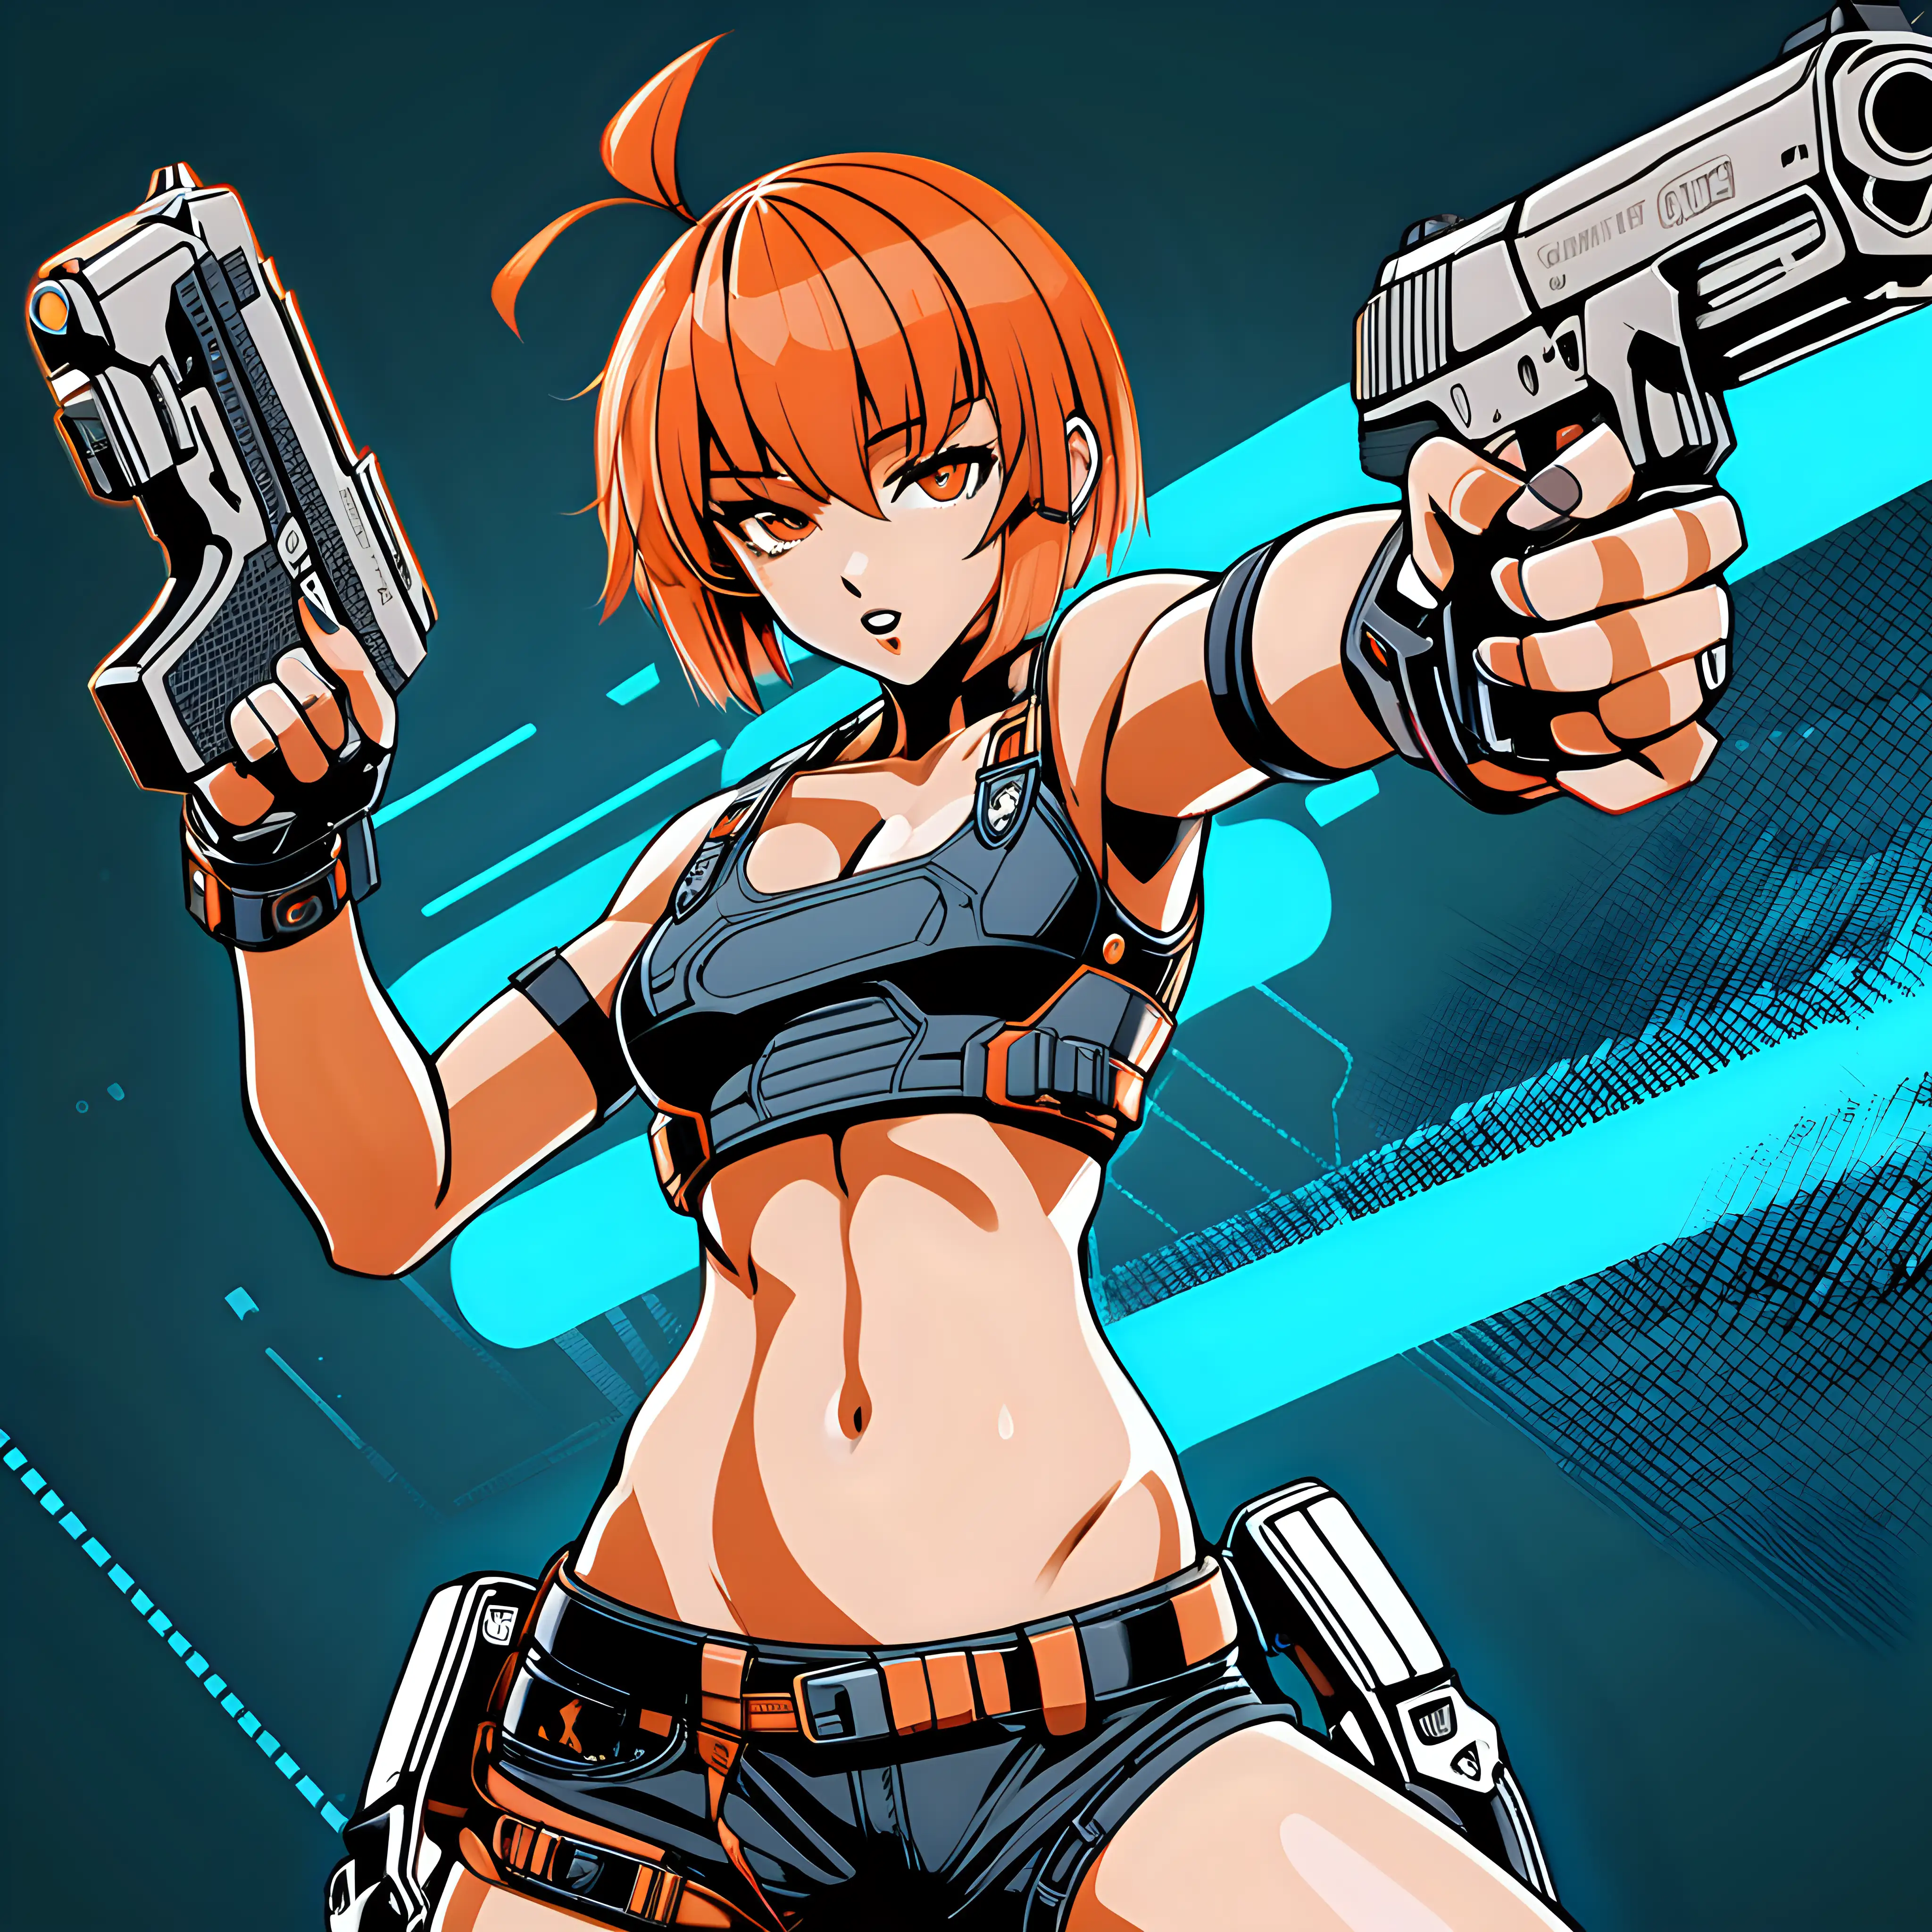 anime cyberpunk girl, tight bra top, exposed muscular midriff, short chin length orange hair, firing futuristic handgun, posterized halftone, full body shot